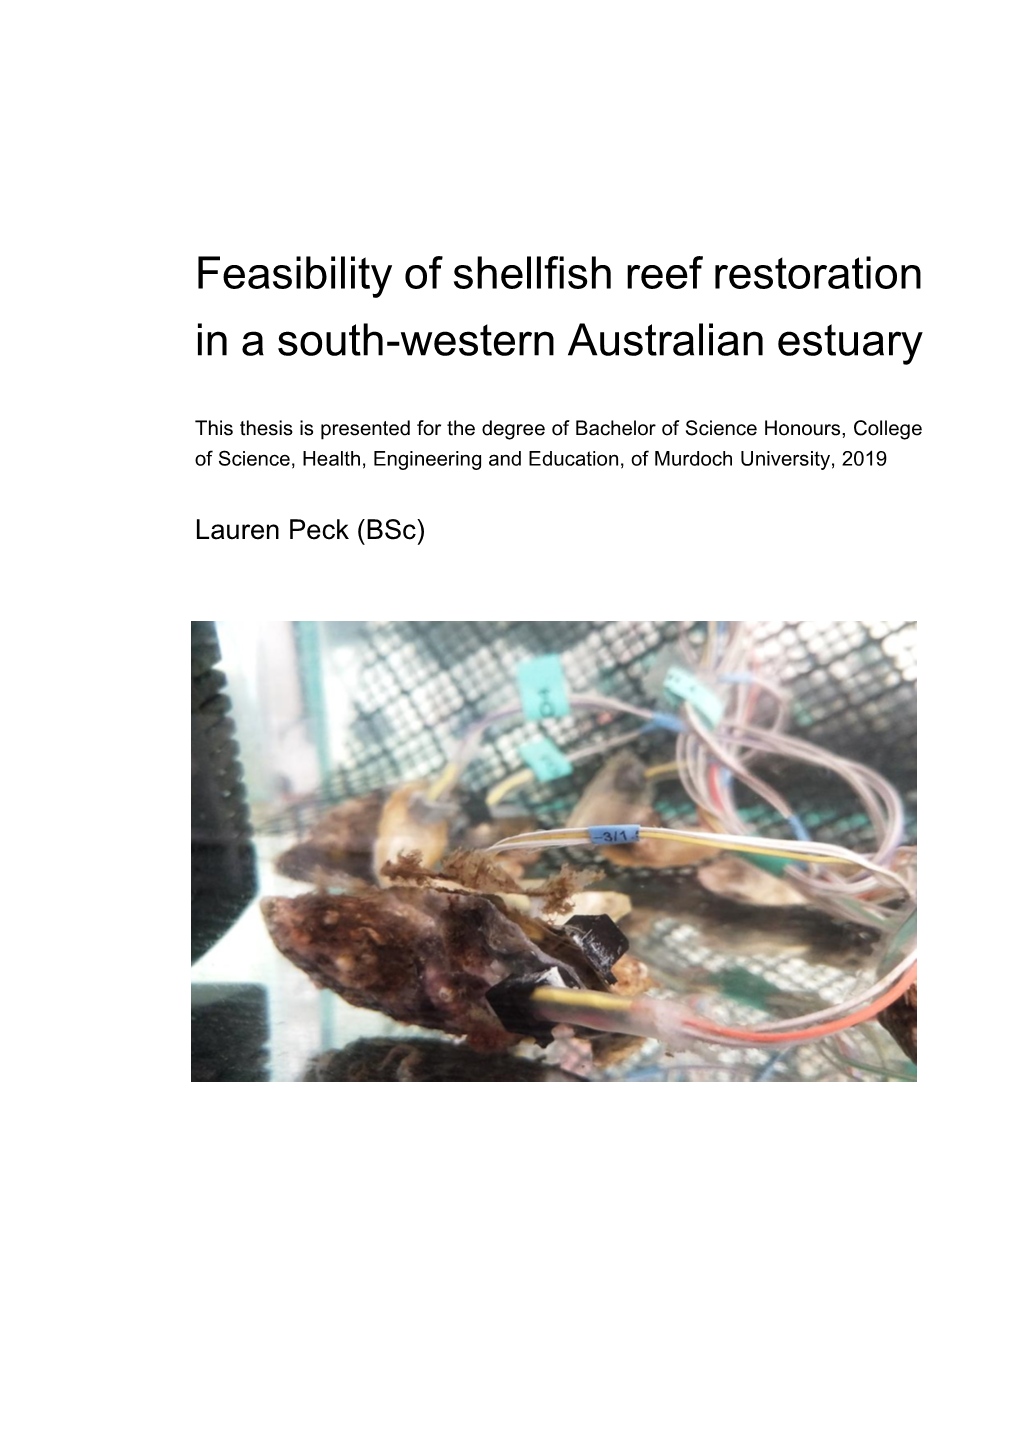 Feasibility of Shellfish Reef Restoration in a South-Western Australian Estuary